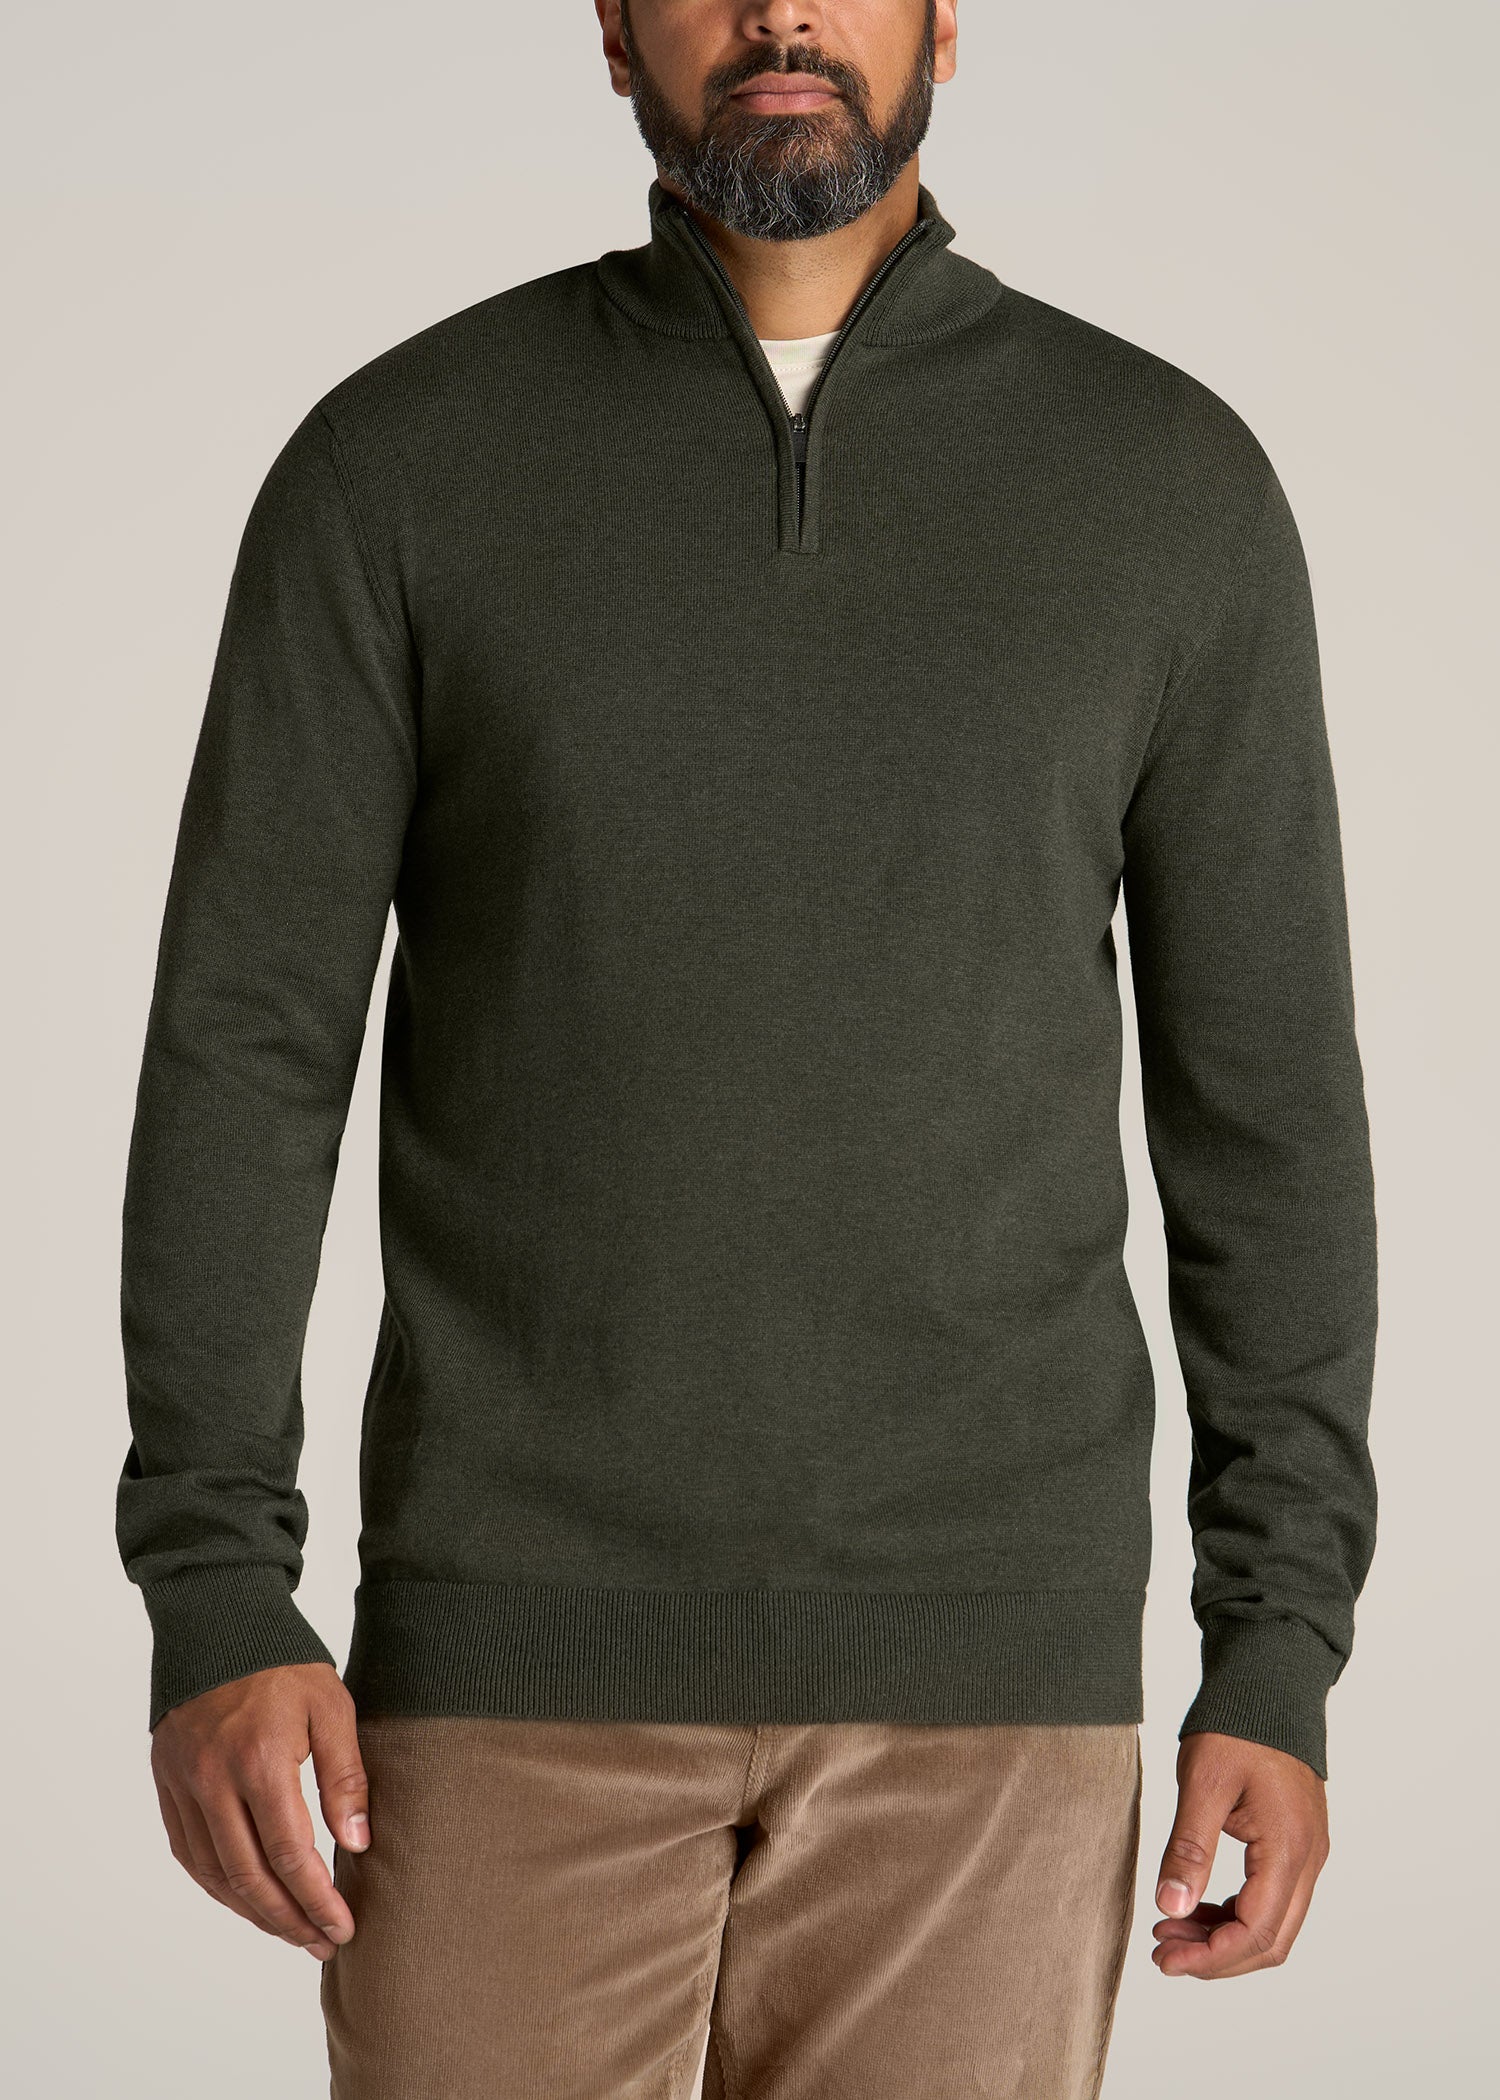 Everyday Quarter-Zip Tall Men's Sweater in Dark Olive Green